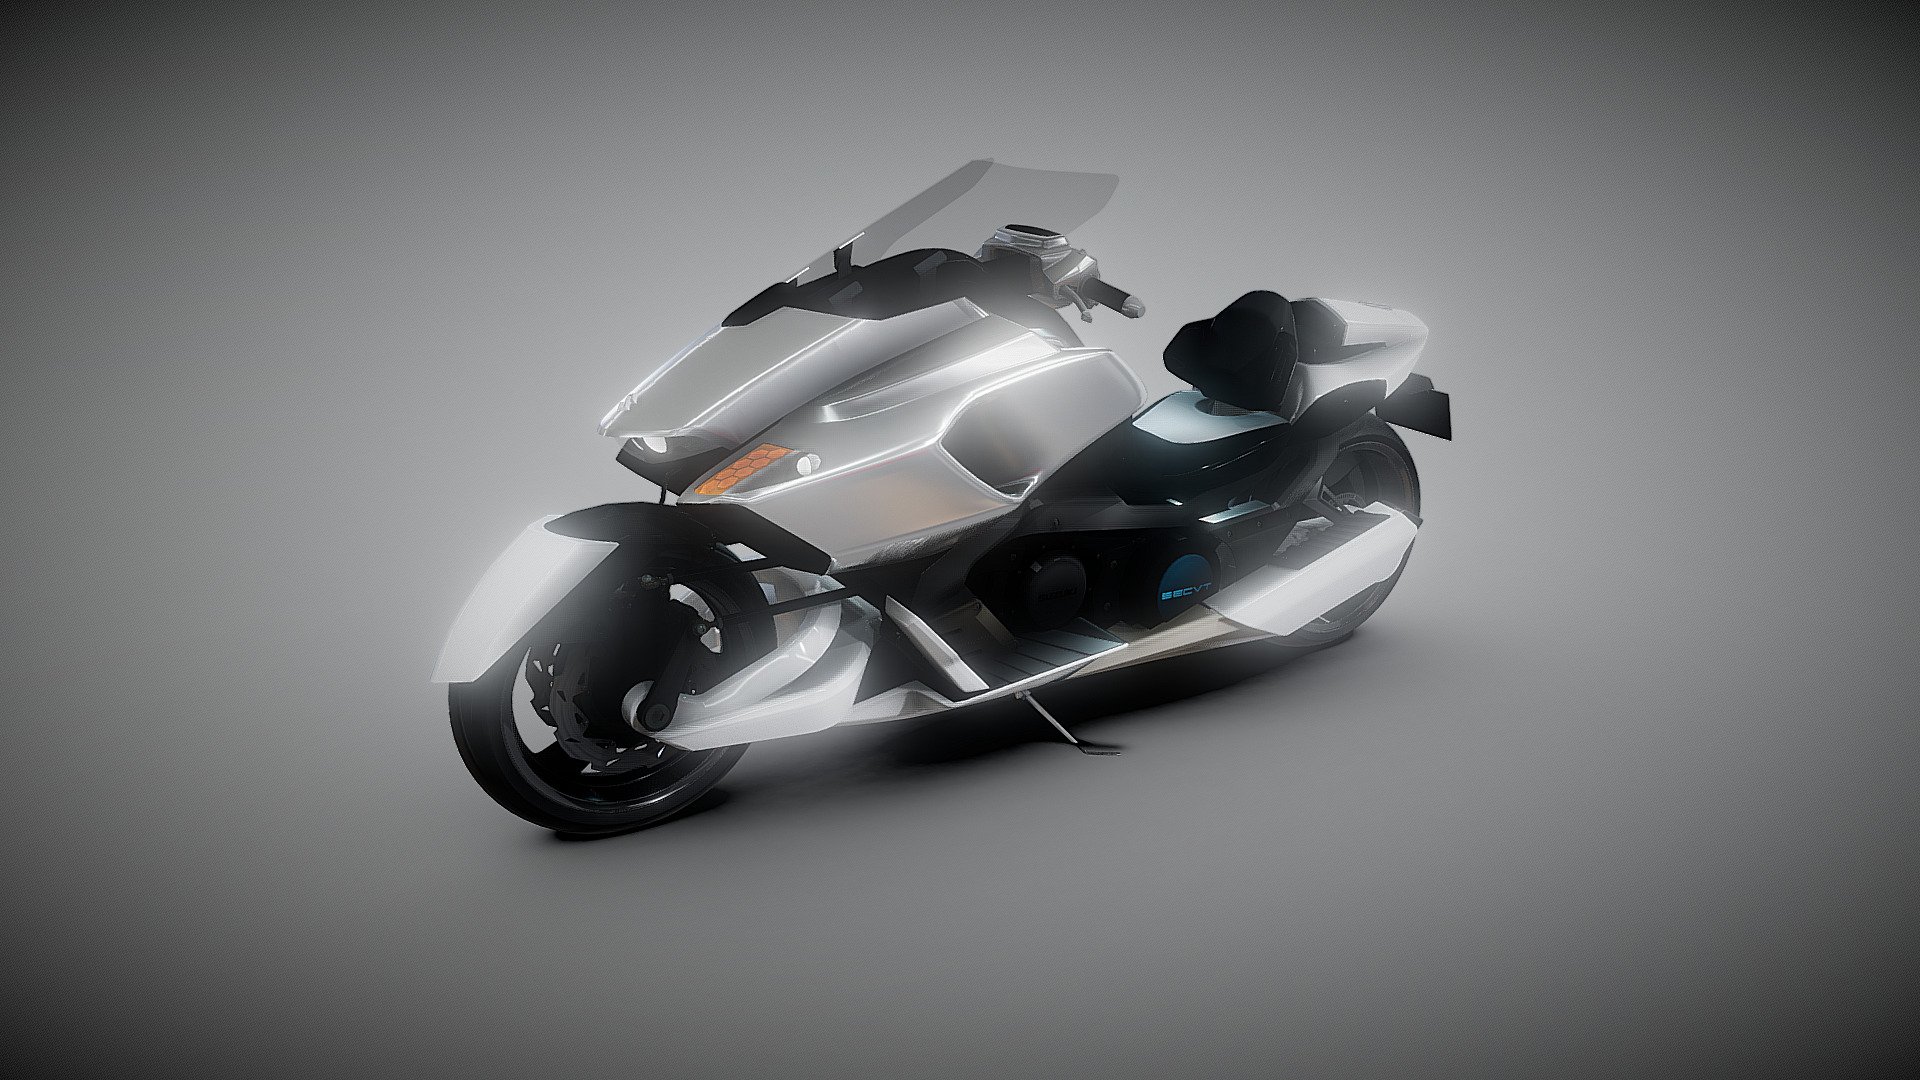 Suzuki - G-Strider motorbike
quick speed model

Dont Ask for free downloads, it will never happen! - Suzuki - G-Strider - 3D model by OGL (@GaryLim) 3d model